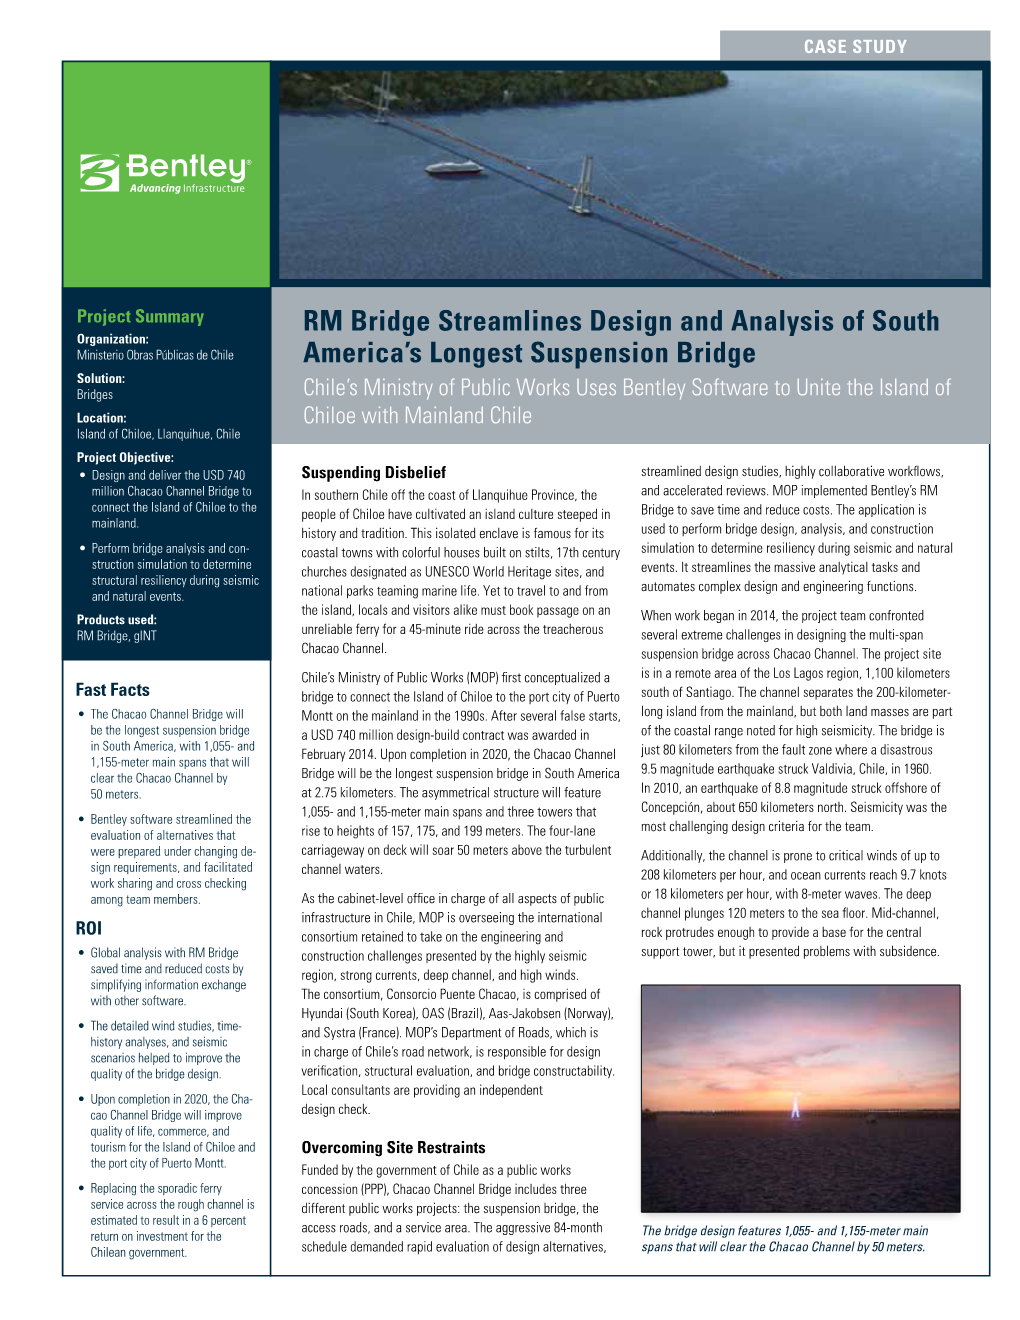 RM Bridge Streamlines Design and Analysis of South America's